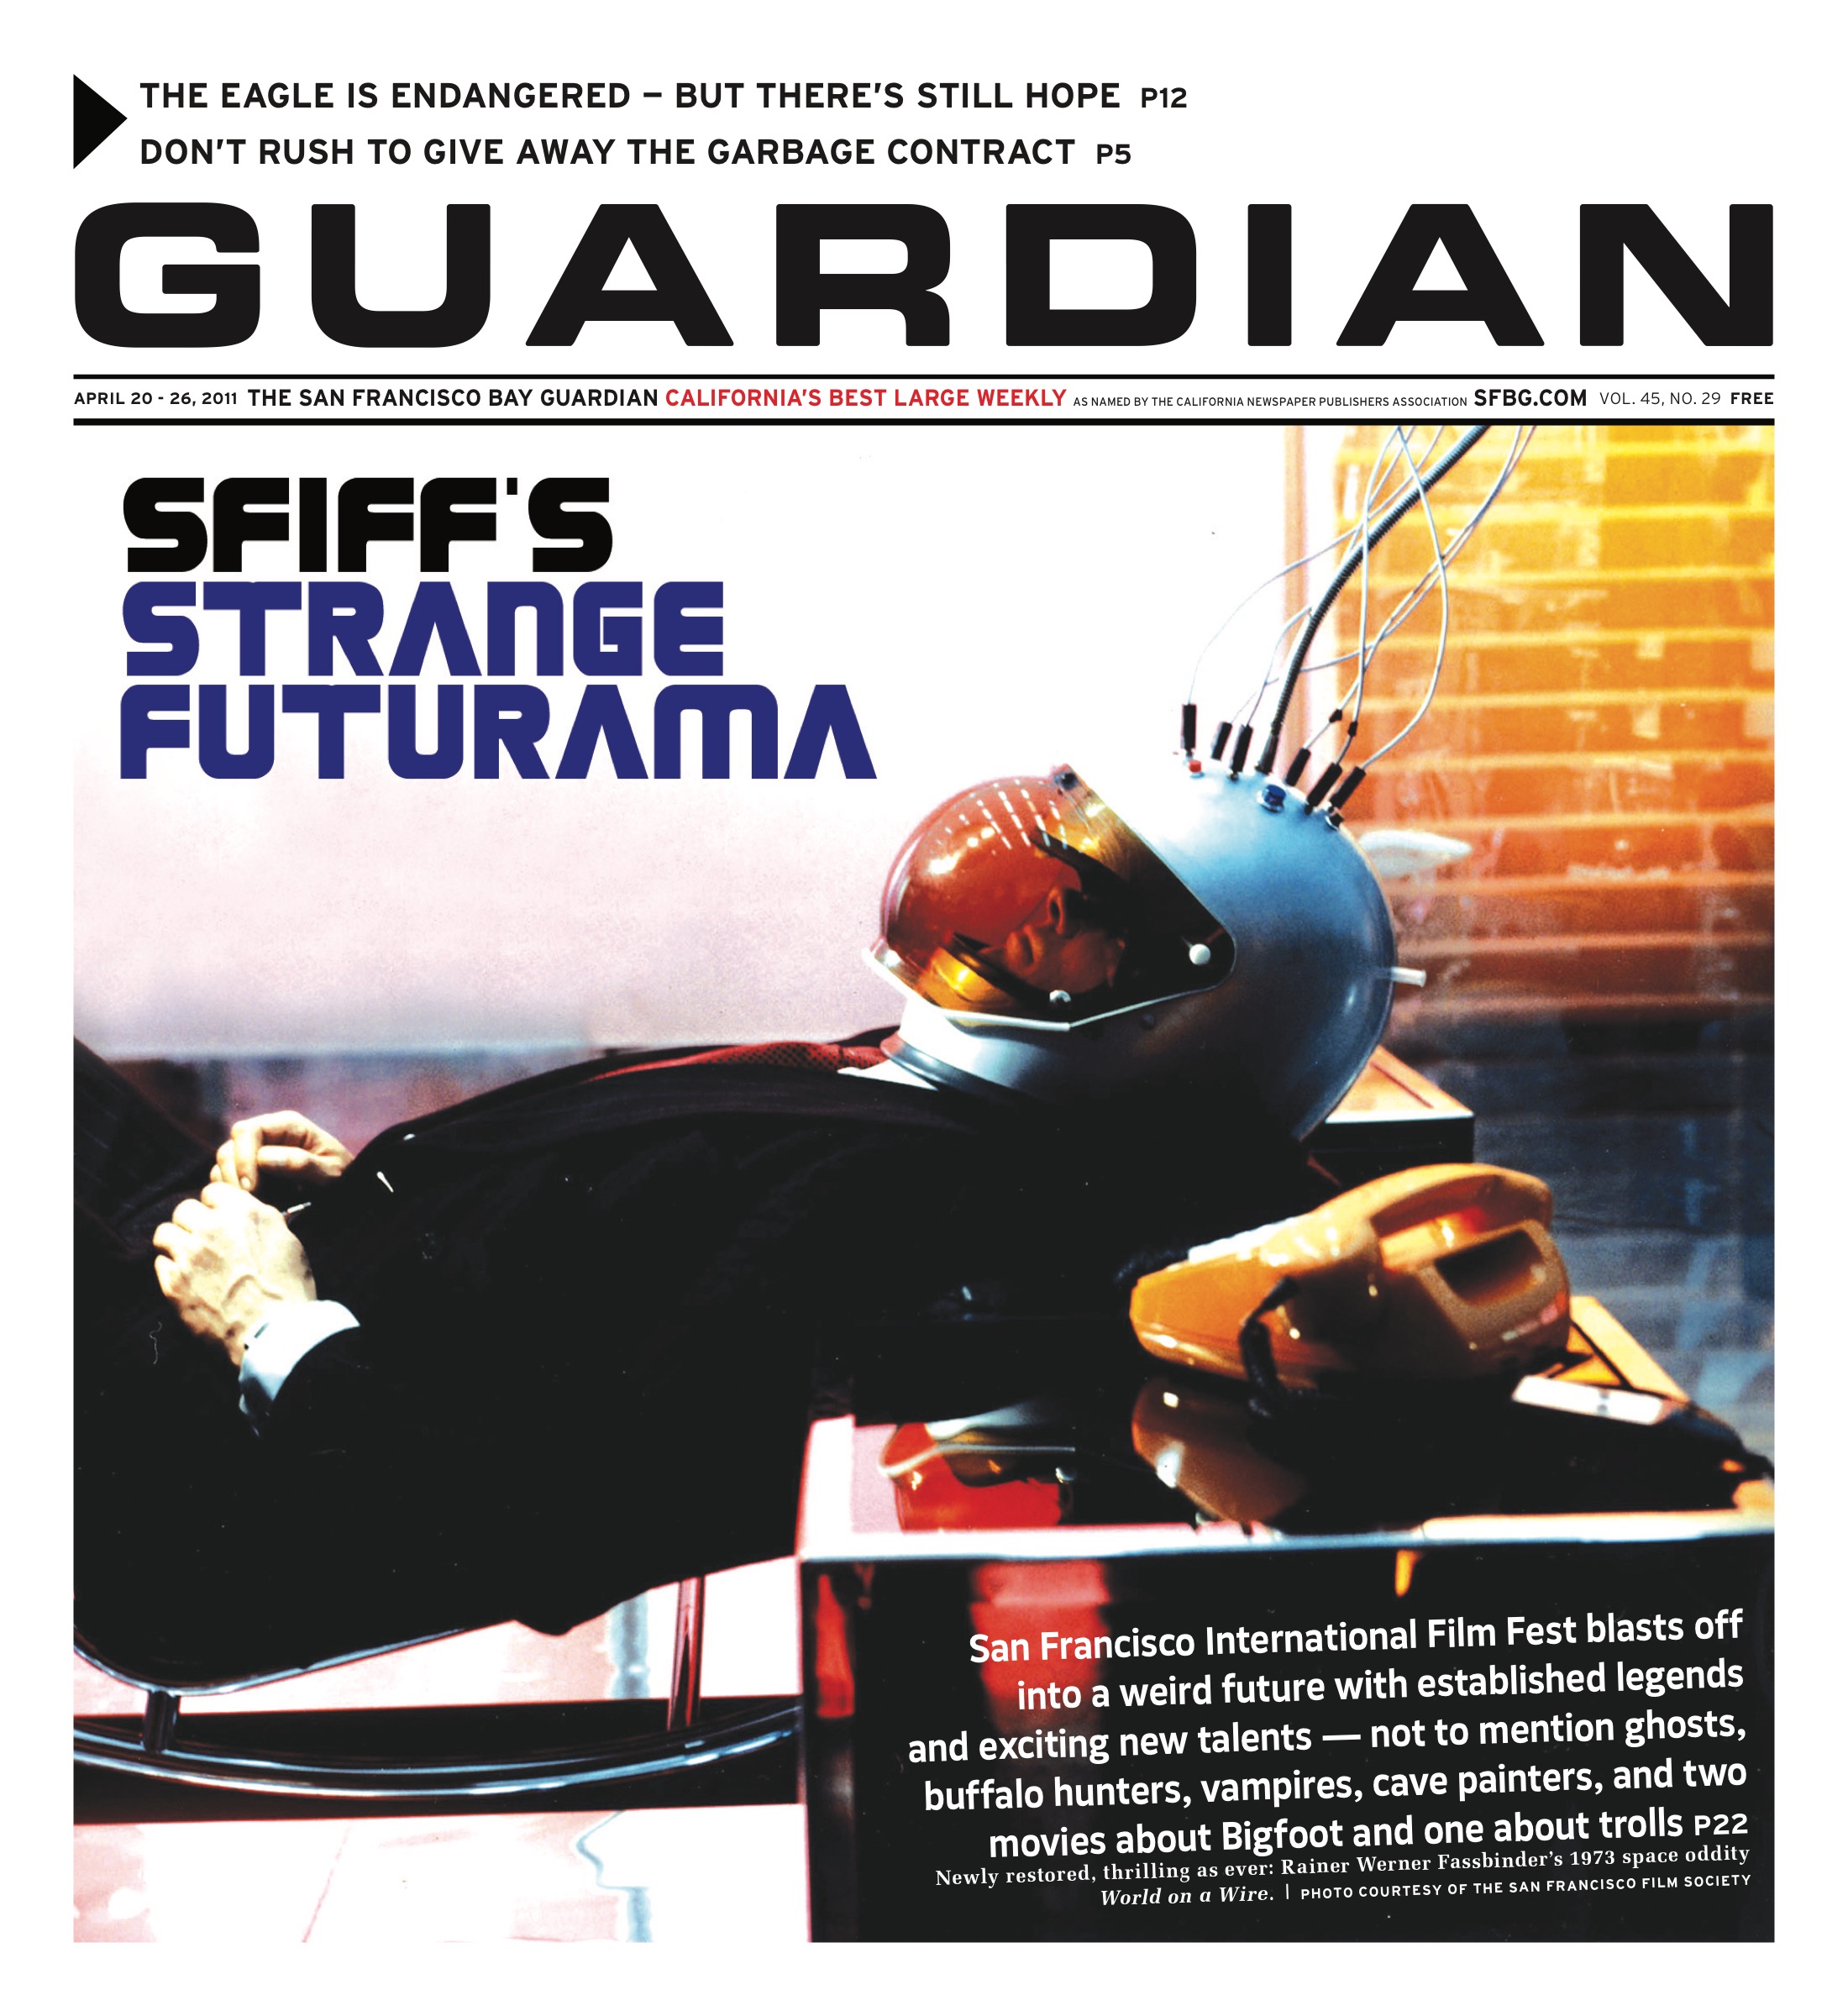 Guardian named California’s best weekly newspaper